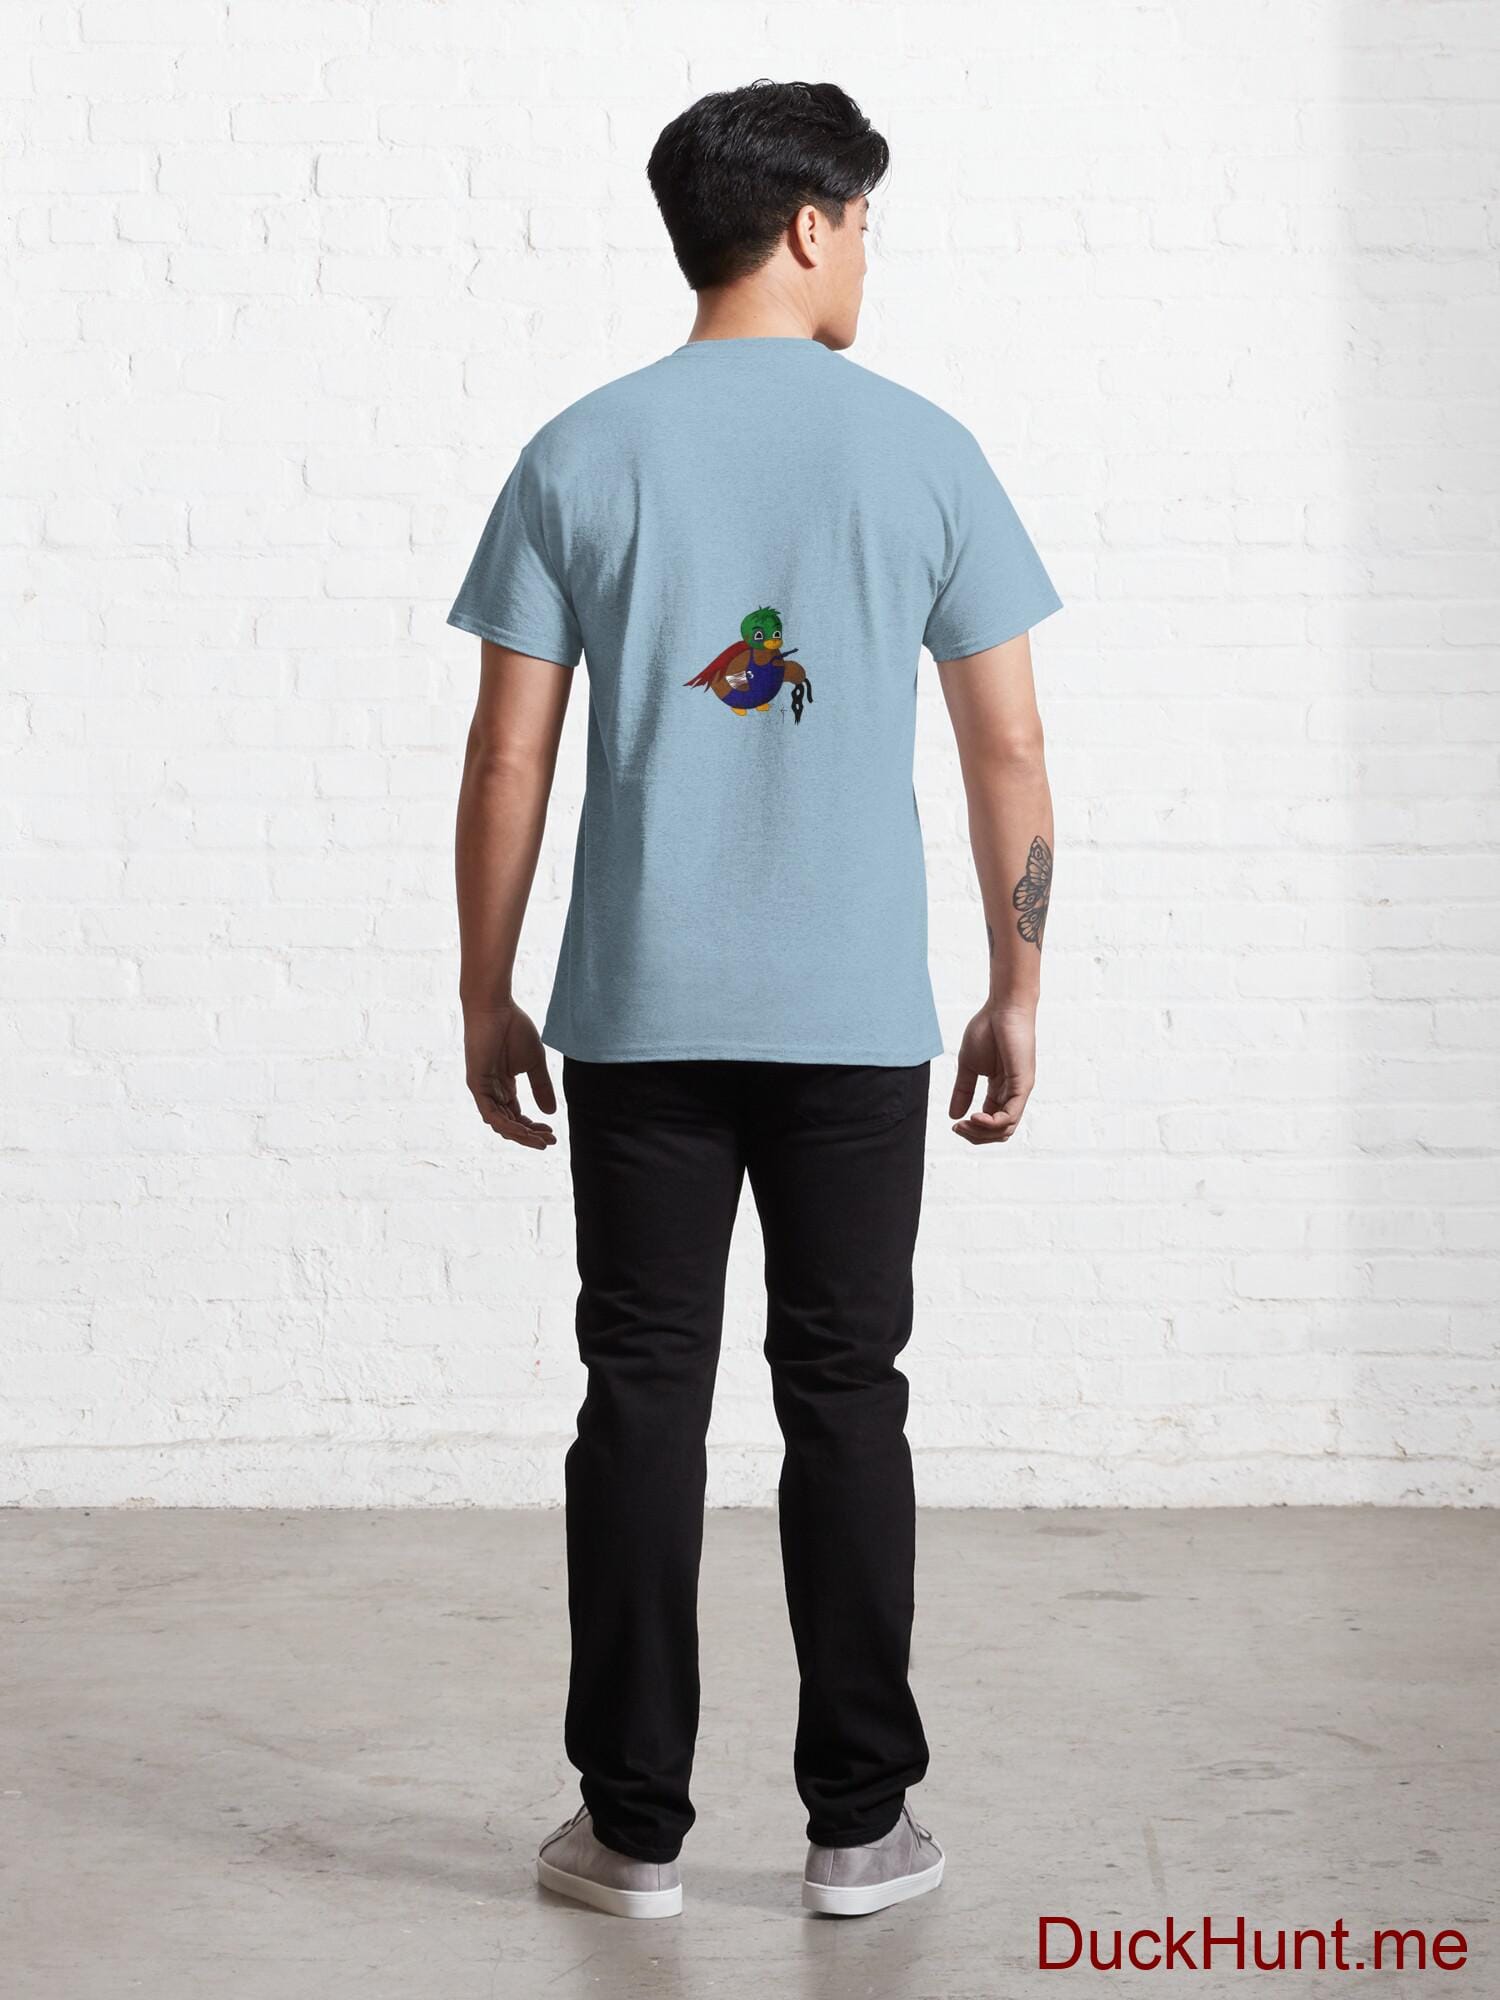 Dead DuckHunt Boss (smokeless) Light Blue Classic T-Shirt (Back printed) alternative image 3